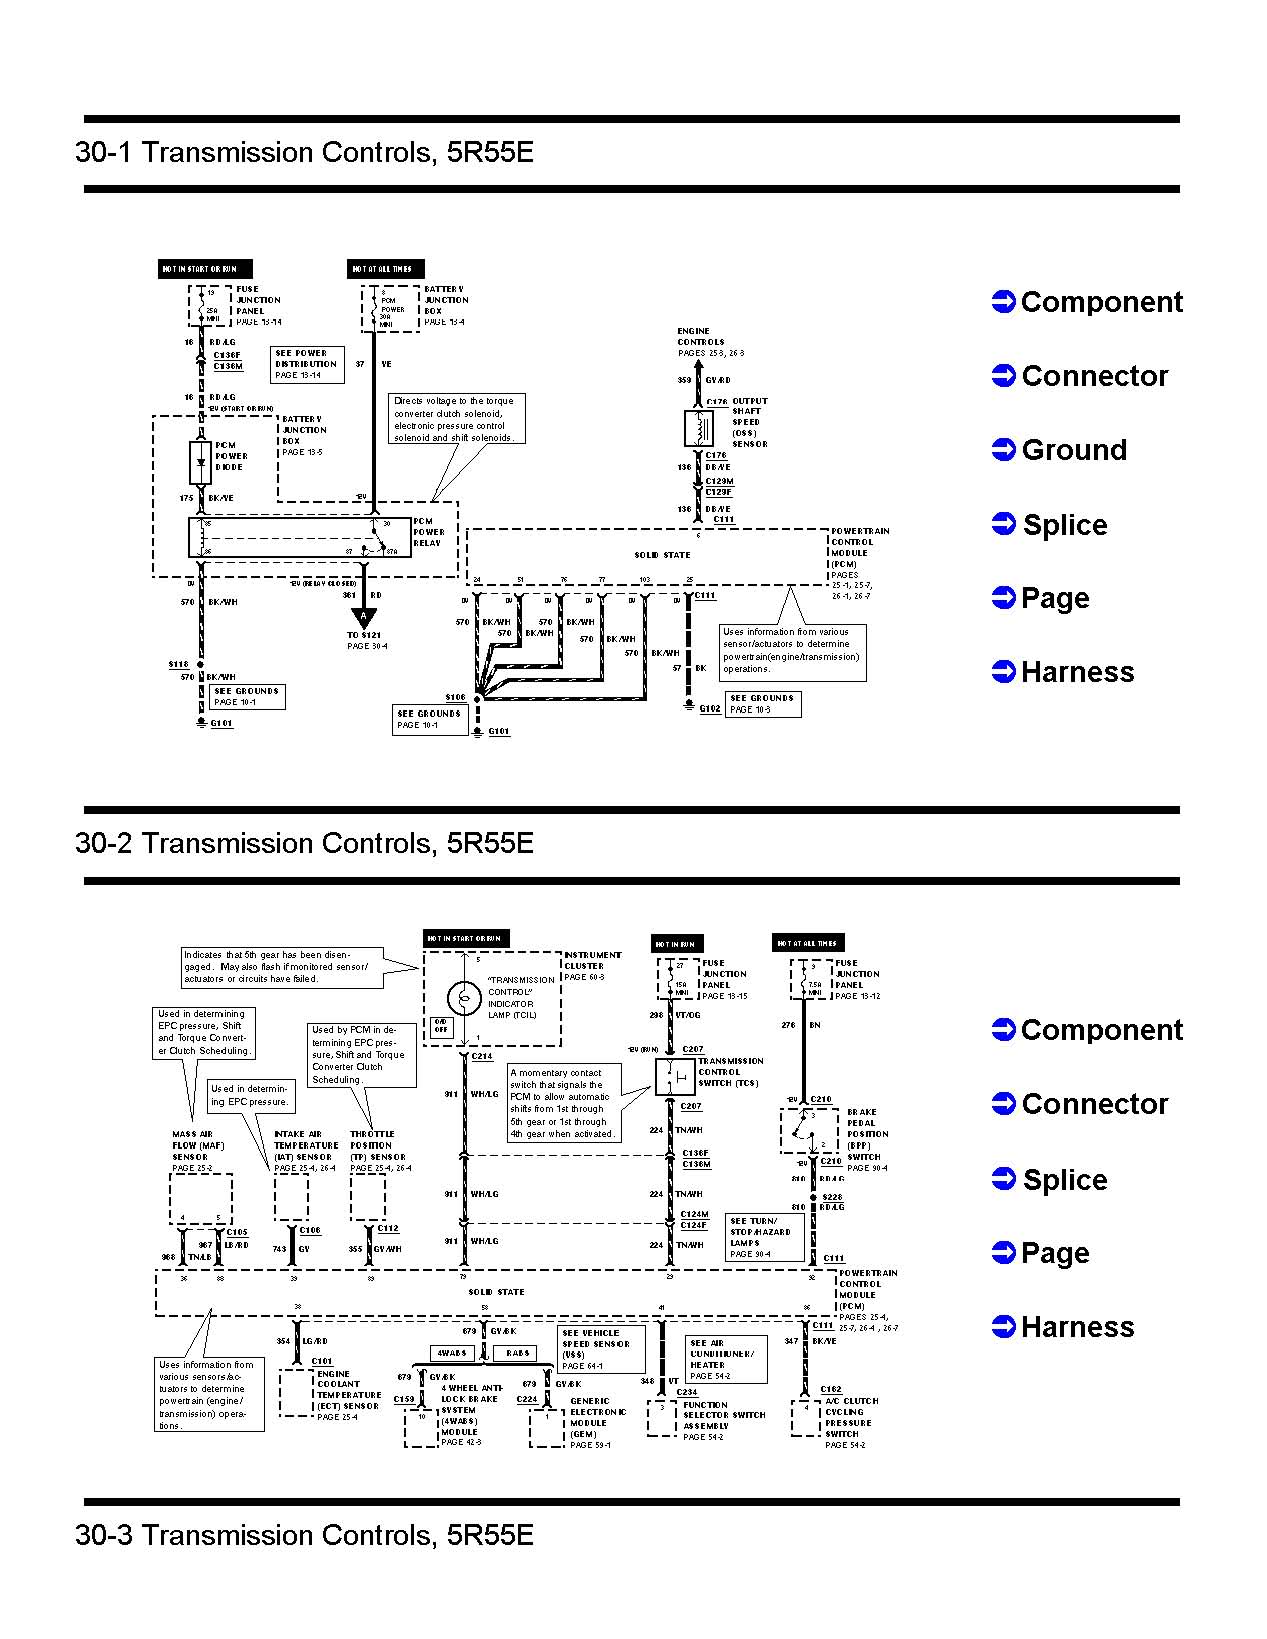 Transmission wiring. - Ranger-Forums - The Ultimate Ford Ranger Resource  2001 Ford Ranger Xlt Wiring Diagram    Ranger-Forums